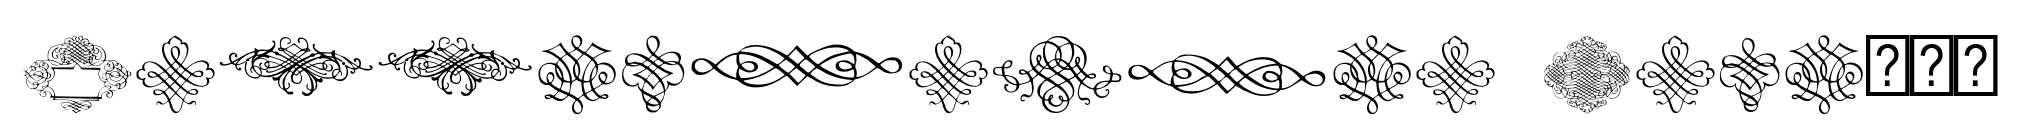 Calligraphia Latina image